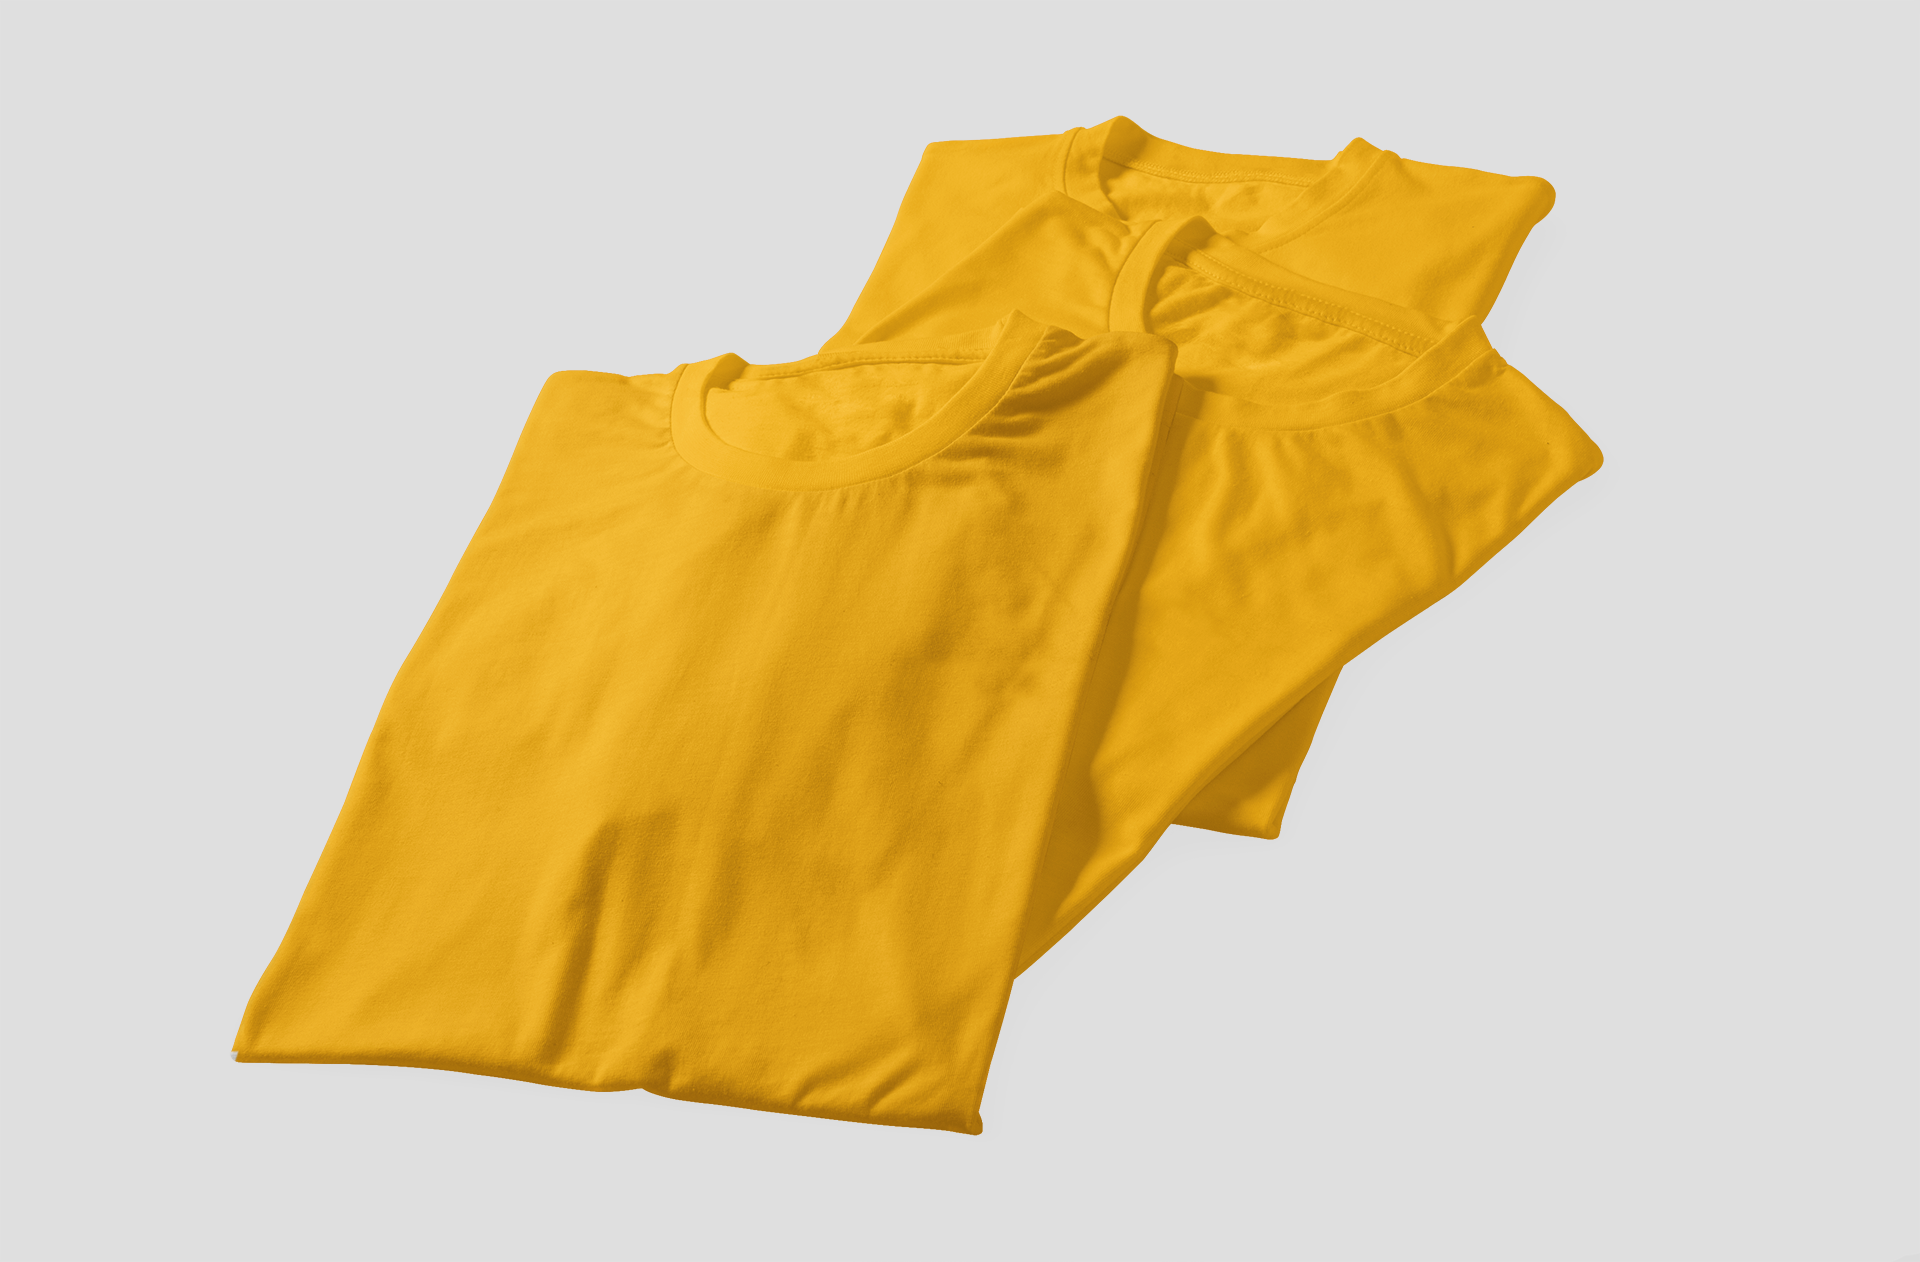 T-Shirts Clothing  Yellow 